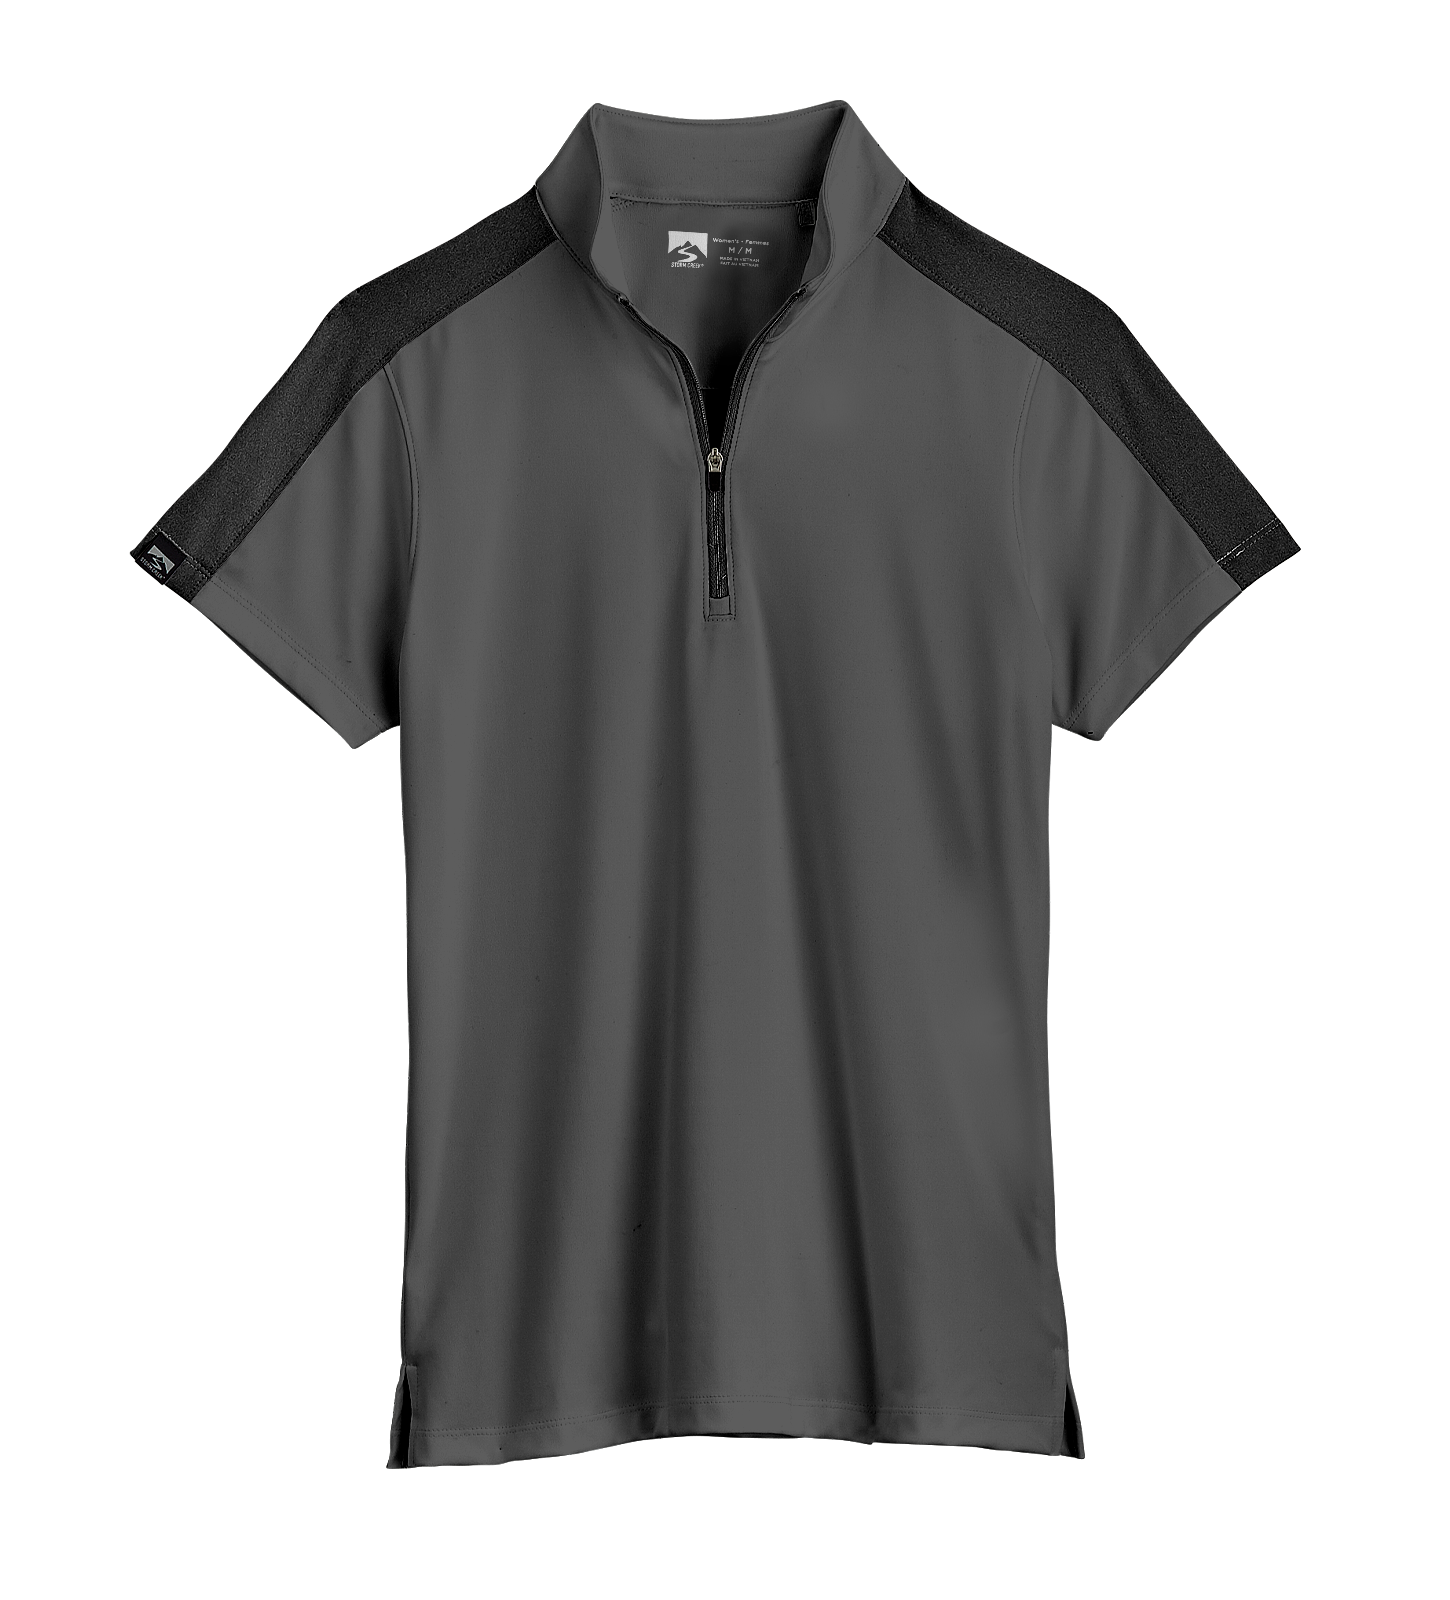 Storm Creek Activator Short-Sleeve Polo Shirt for Ladies - Dark Heather Gray/Black - XL